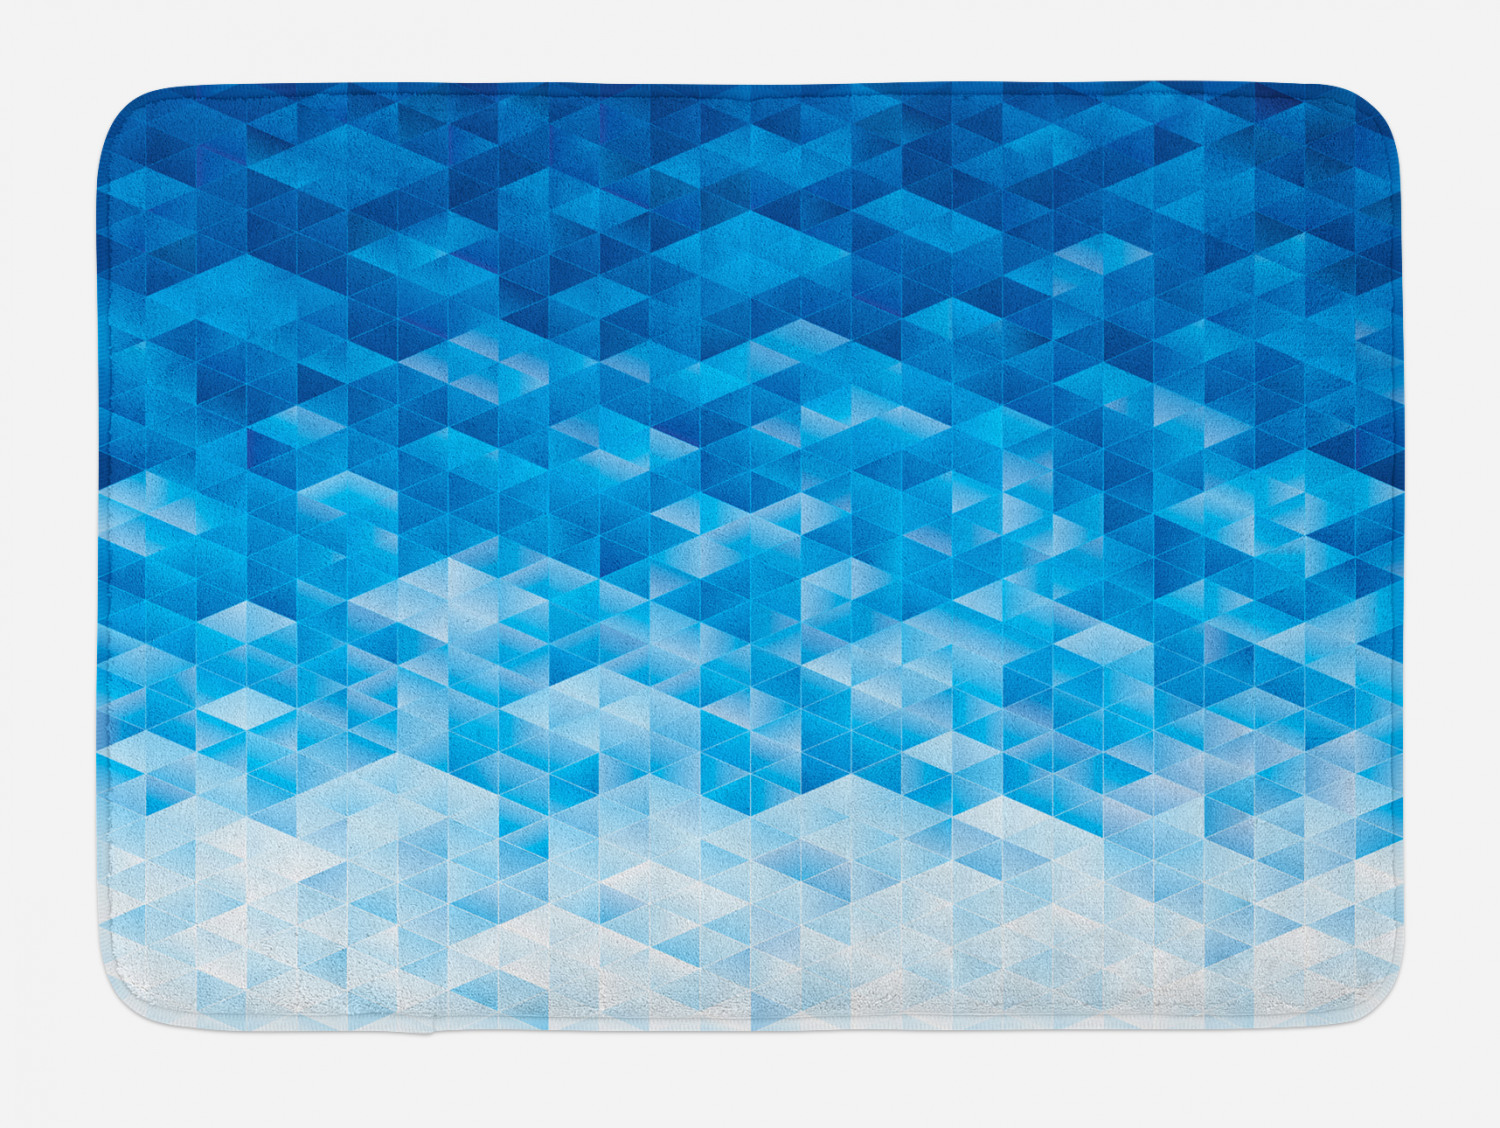 Geometric Bath Mat, Geometric Gradient Digital Texture with Mosaic Triangle Pixel Graphic Print Art, Non-Slip Plush Mat Bathroom Kitchen Laundry Room Decor, 29.5 X 17.5 Inches, Pale Blue, Ambesonne - image 1 of 2